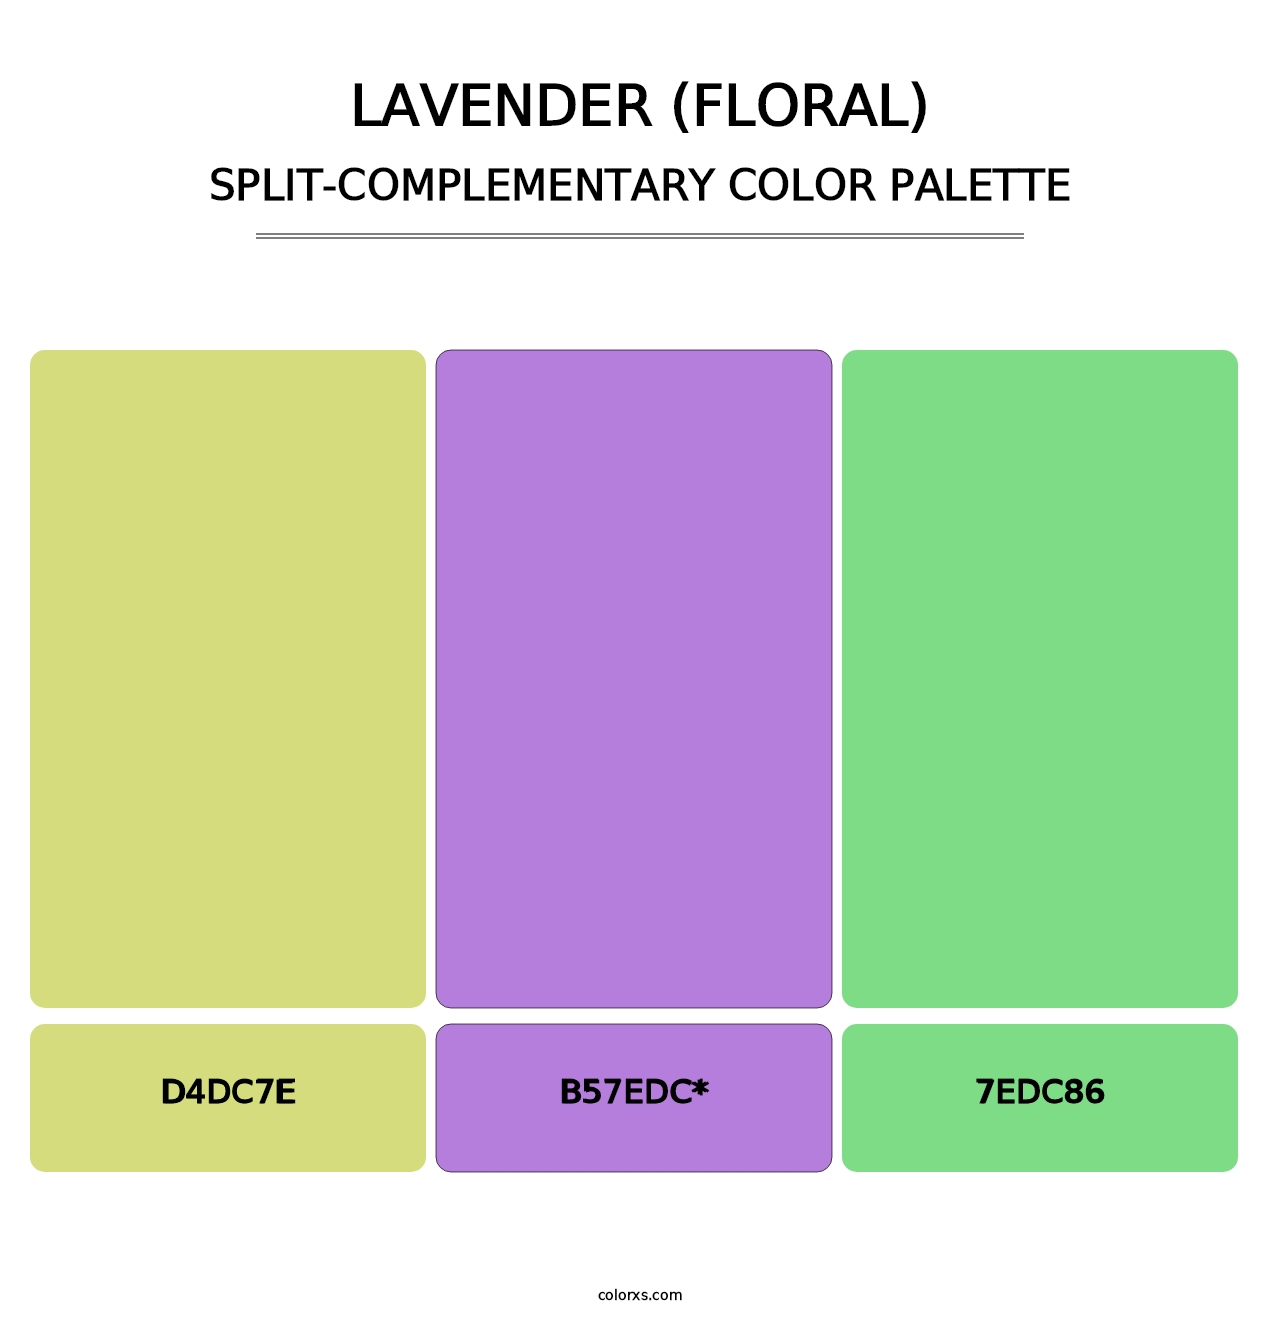 Lavender (Floral) - Split-Complementary Color Palette